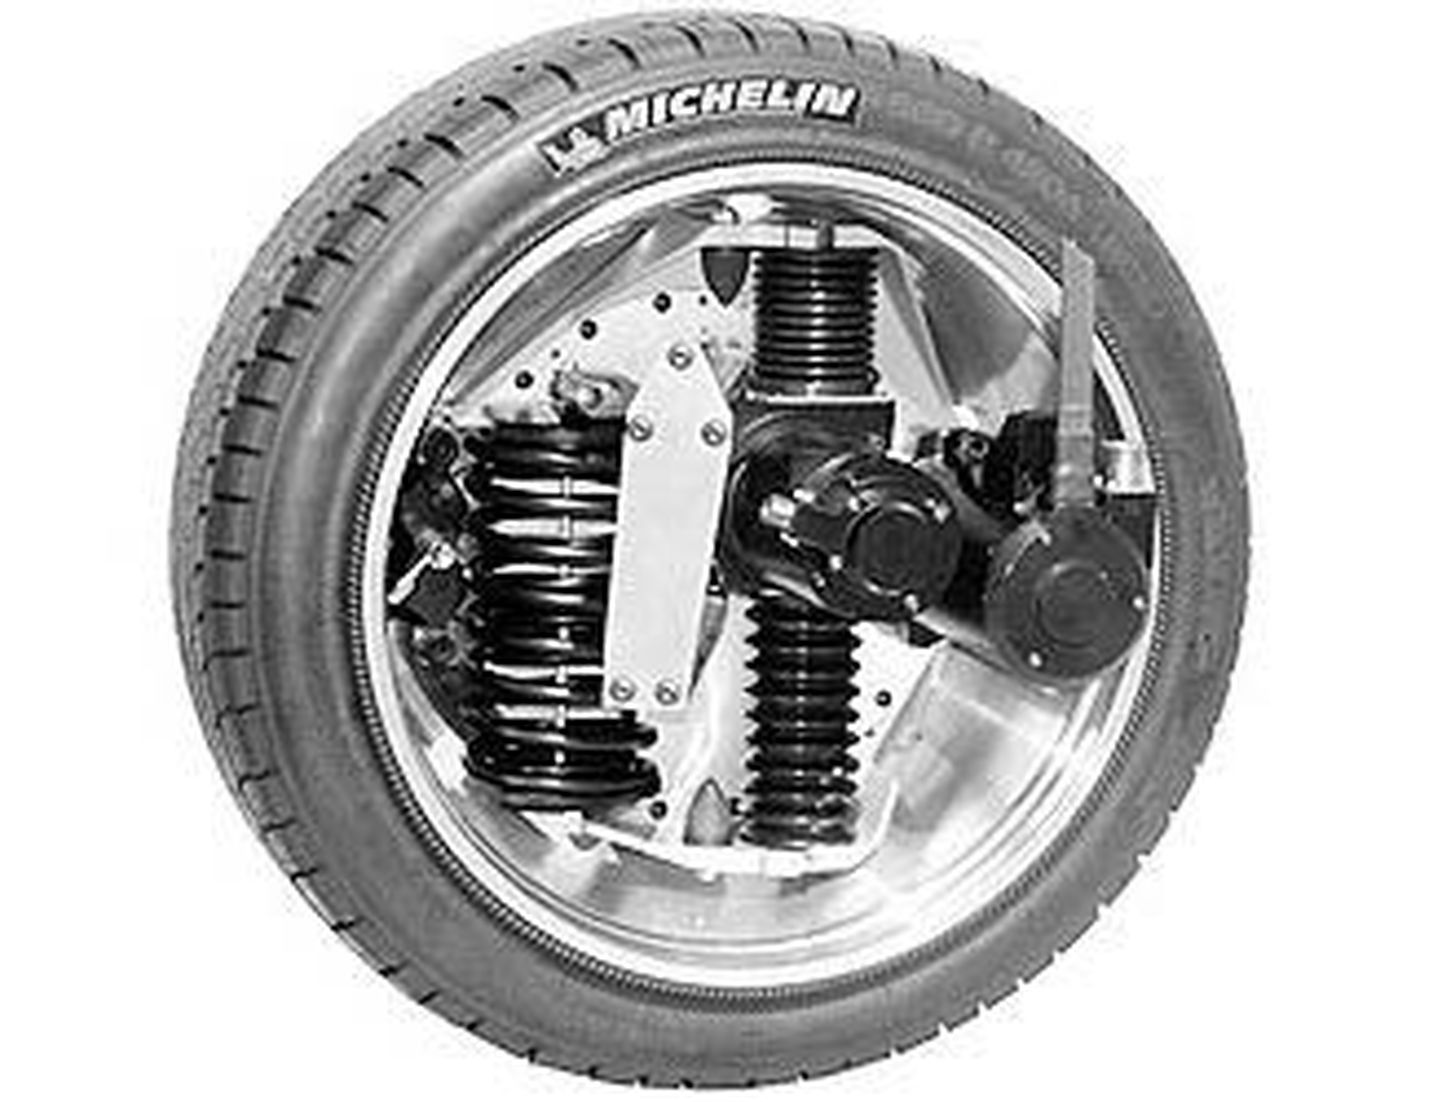 Michelin Active Wheel.